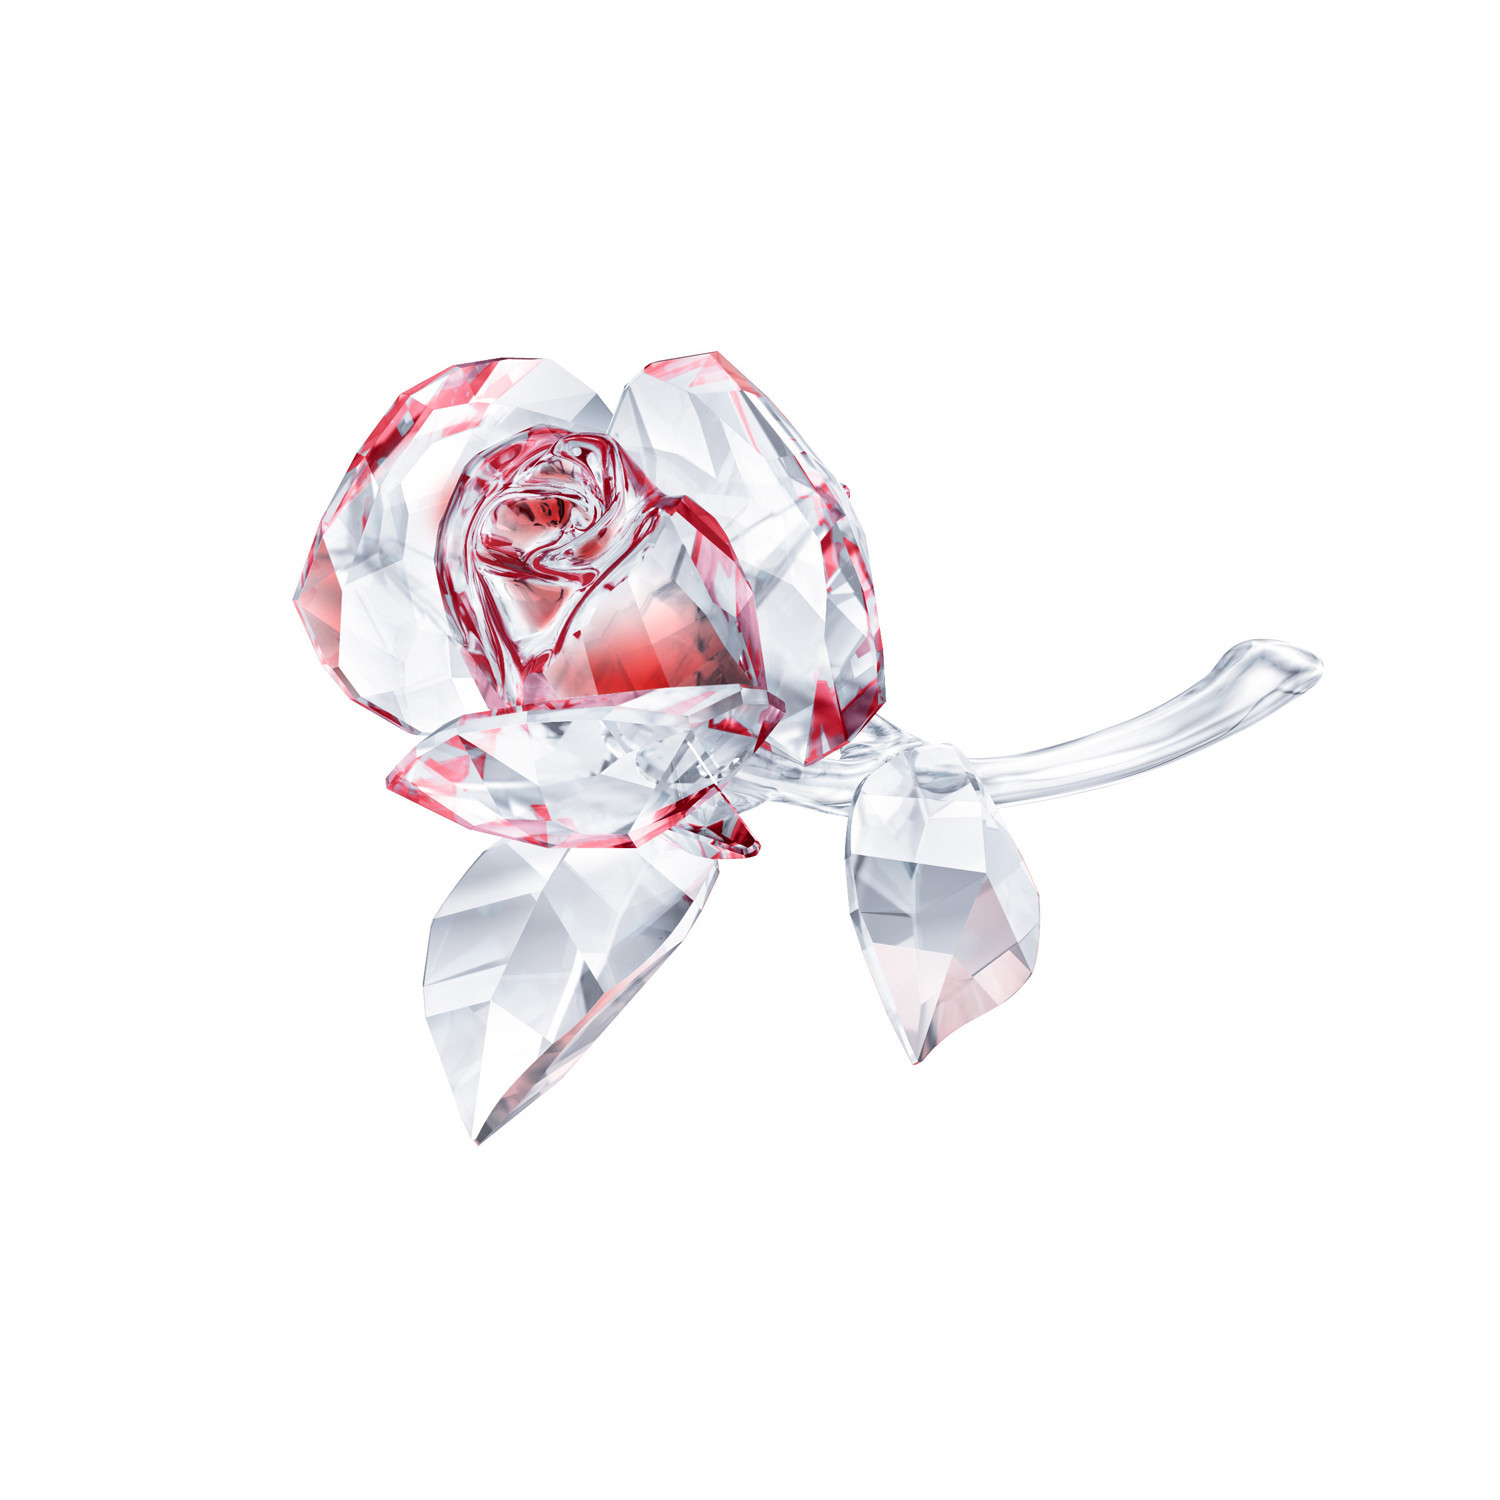 Figurine Swarovski Rose en fleur rouge